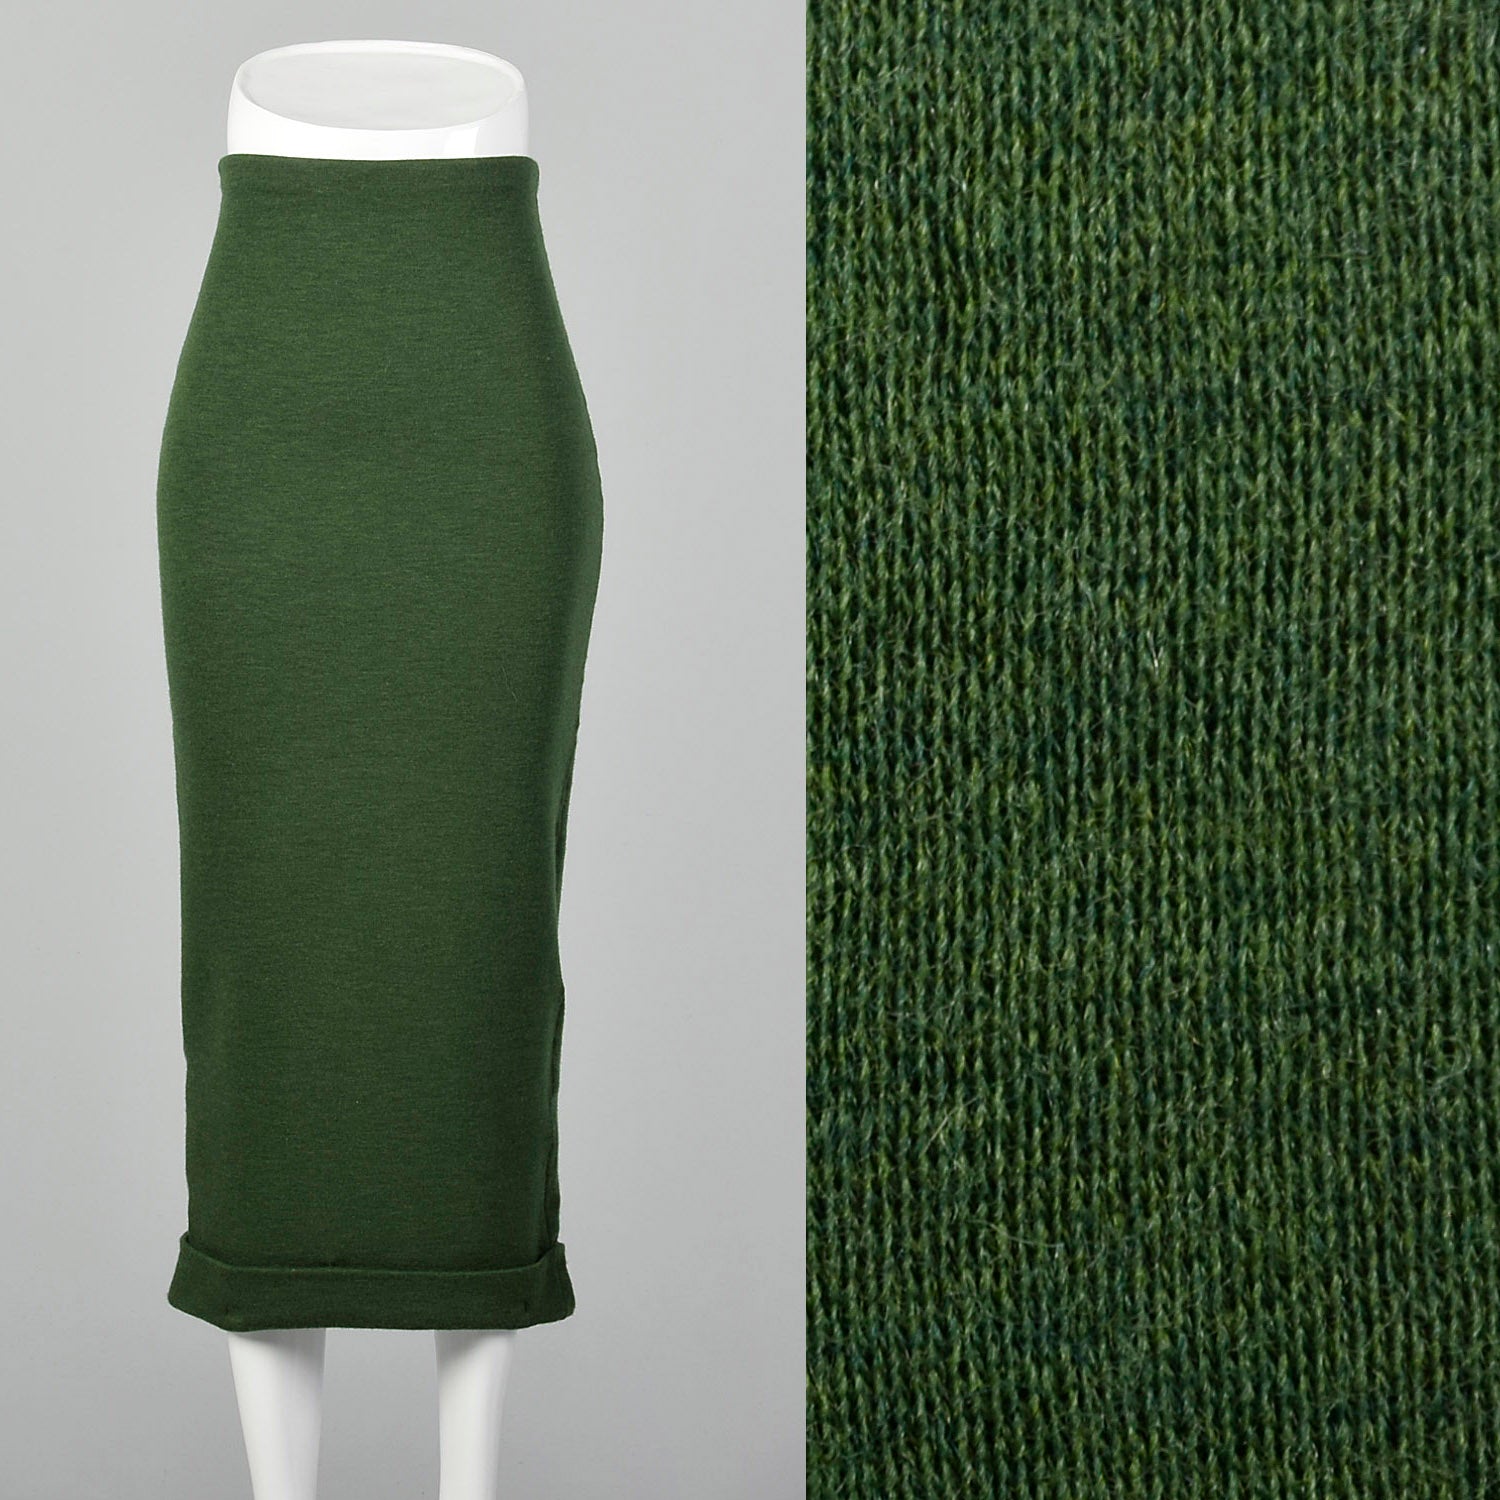 Small Romeo Gigli 1990s Green Knit Skirt